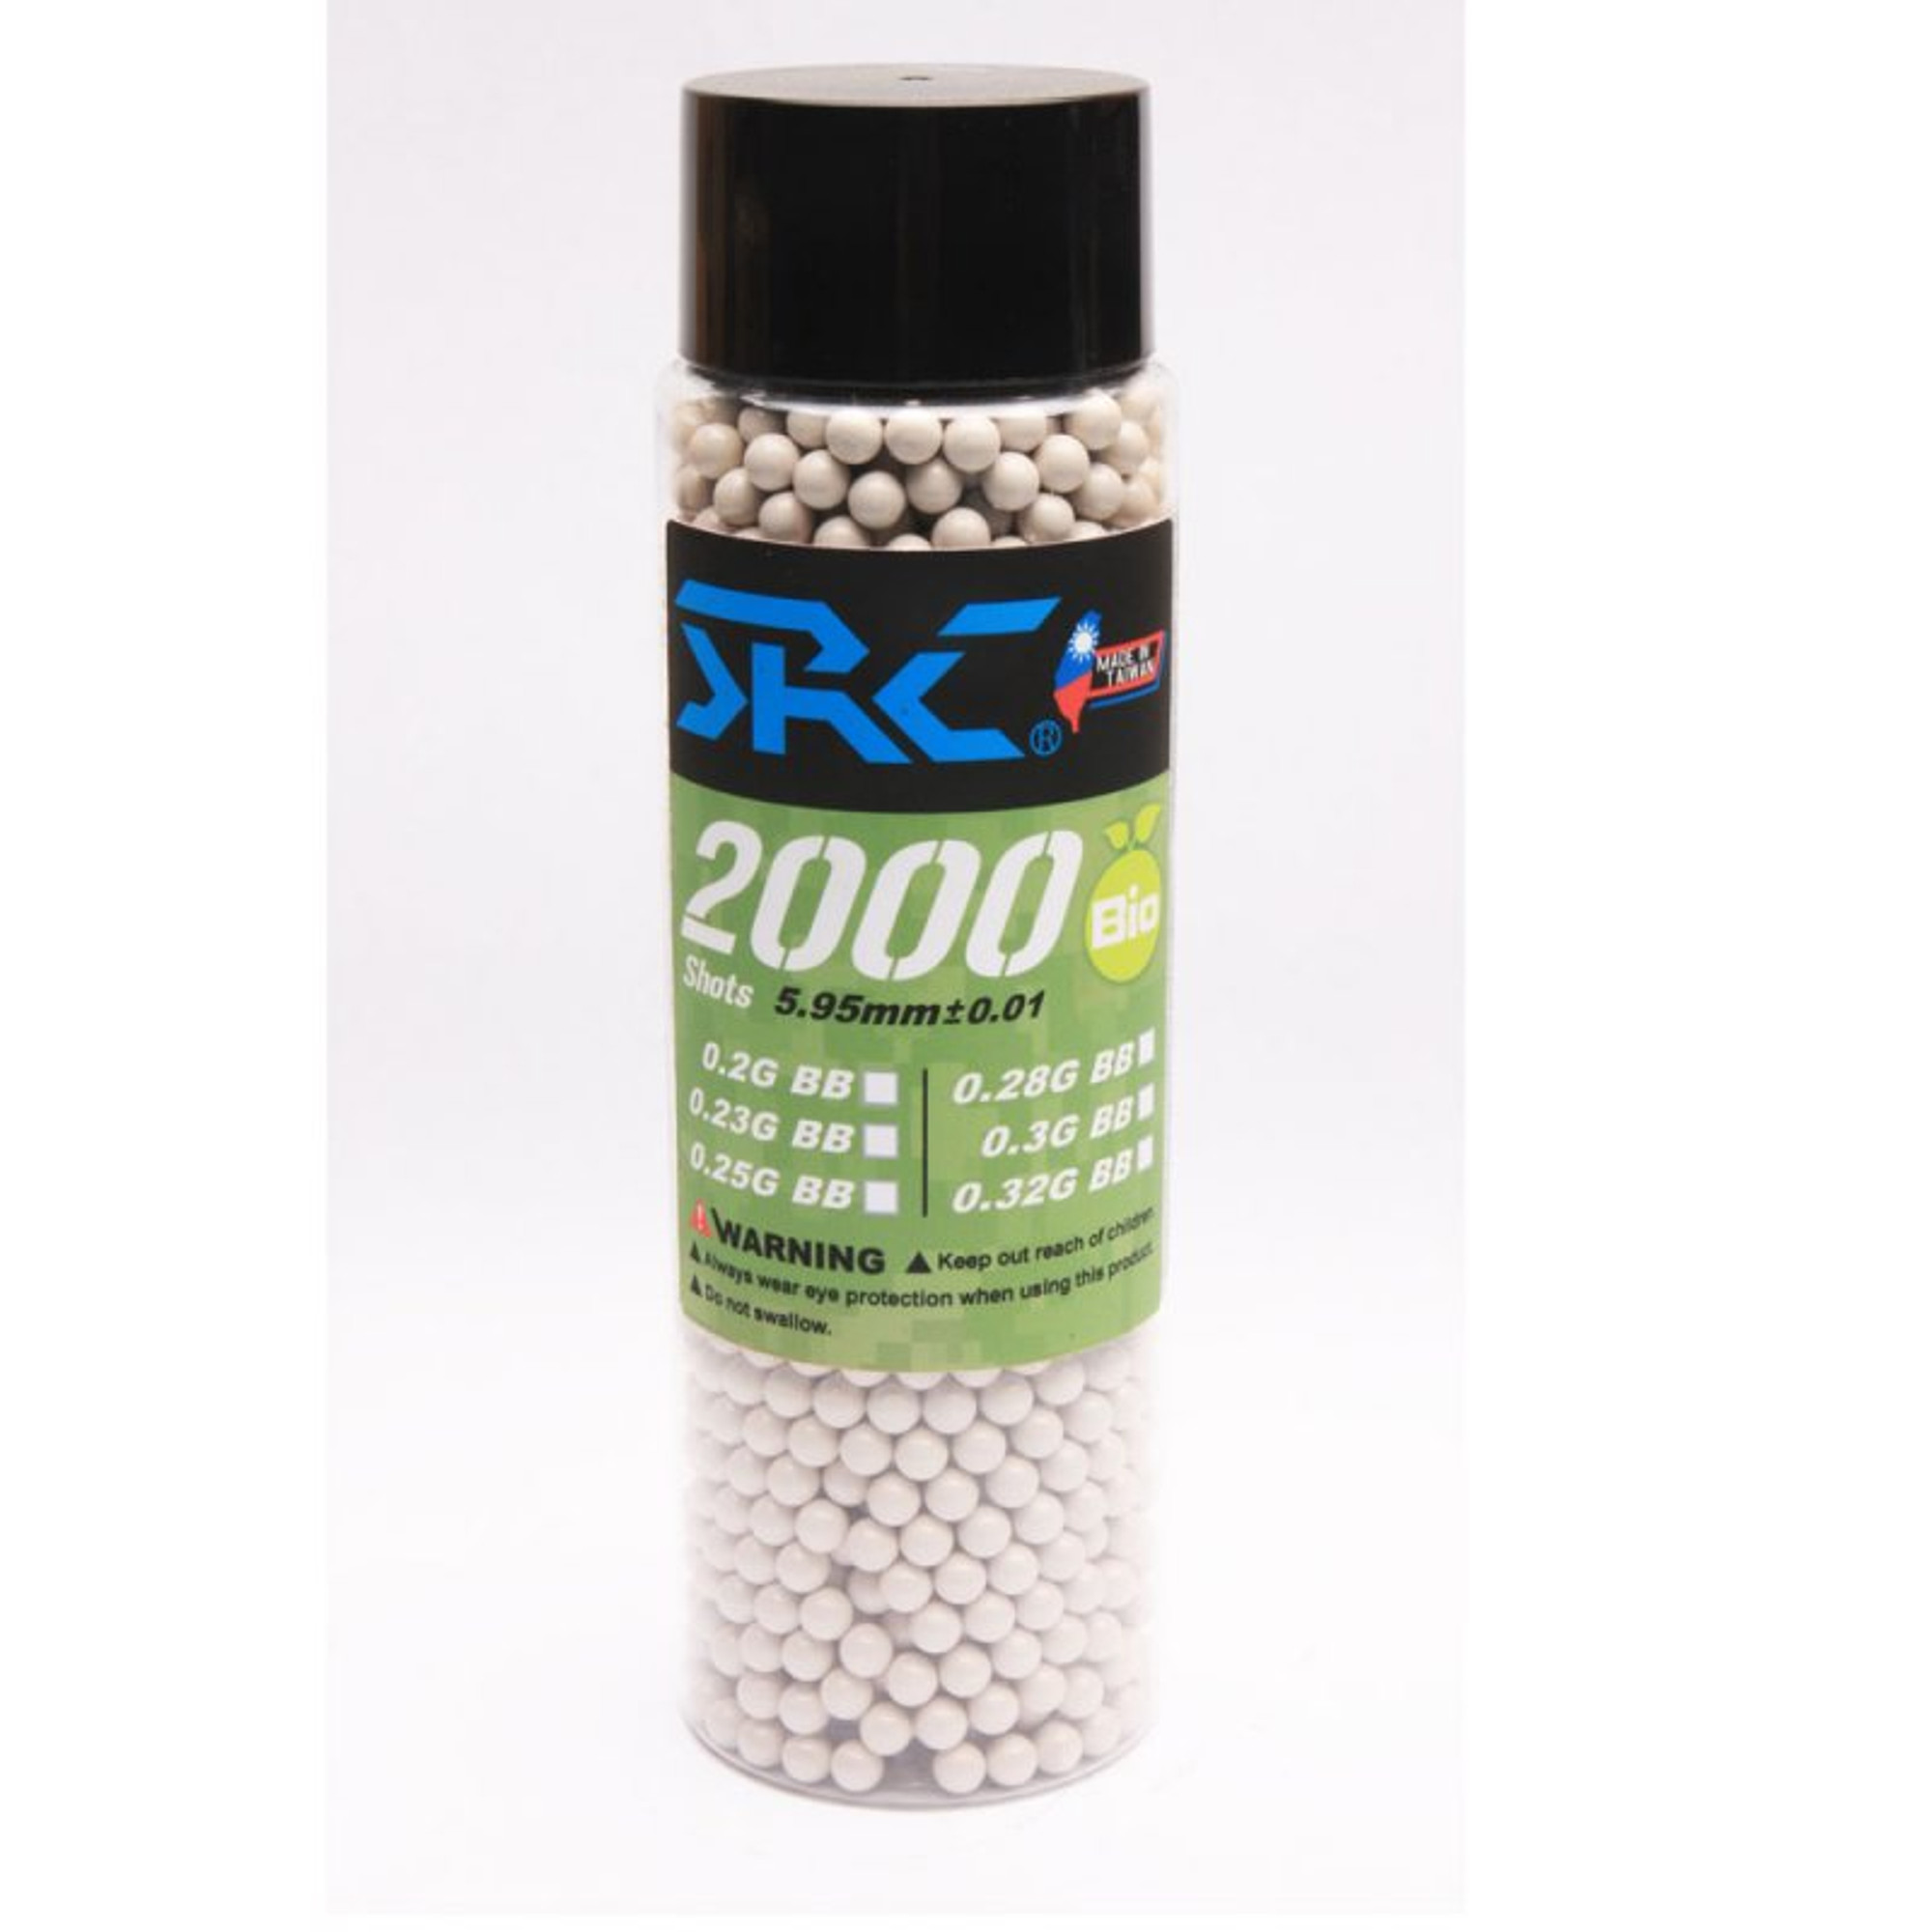 SRC Biodegradable Airsoft BB 0.20g 2000R Bottle